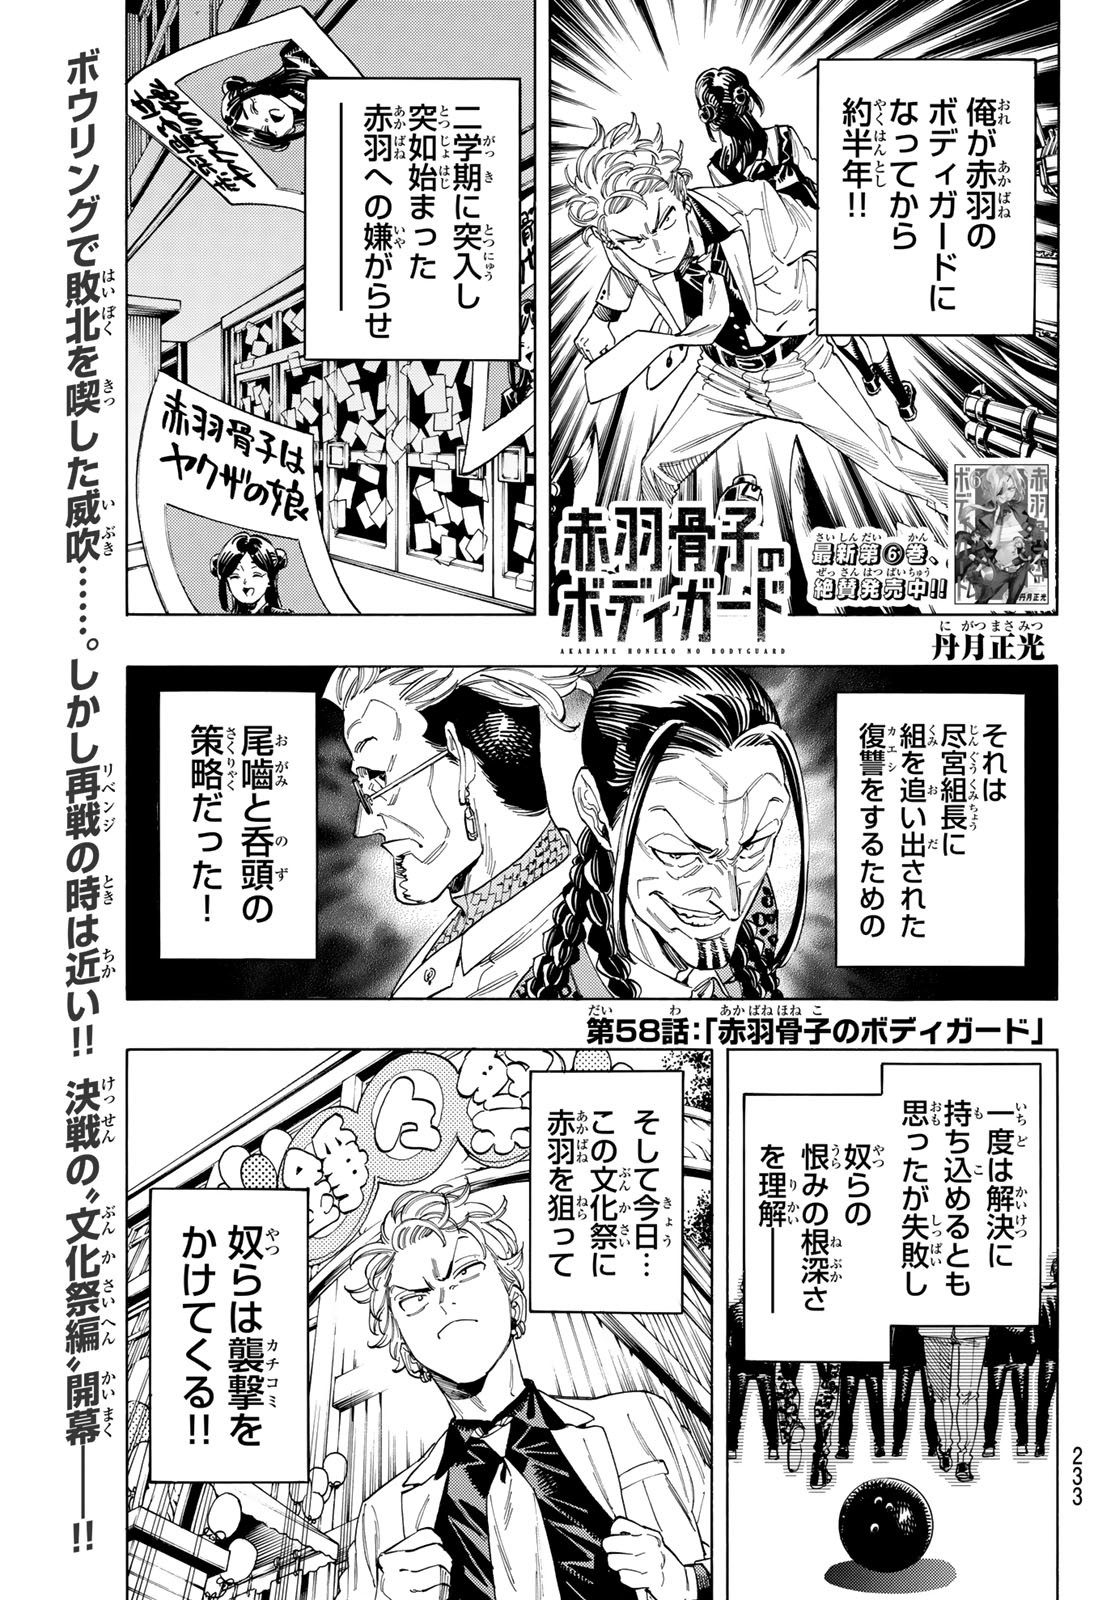 Akabane Honeko no Bodyguard - Chapter 58 - Page 1